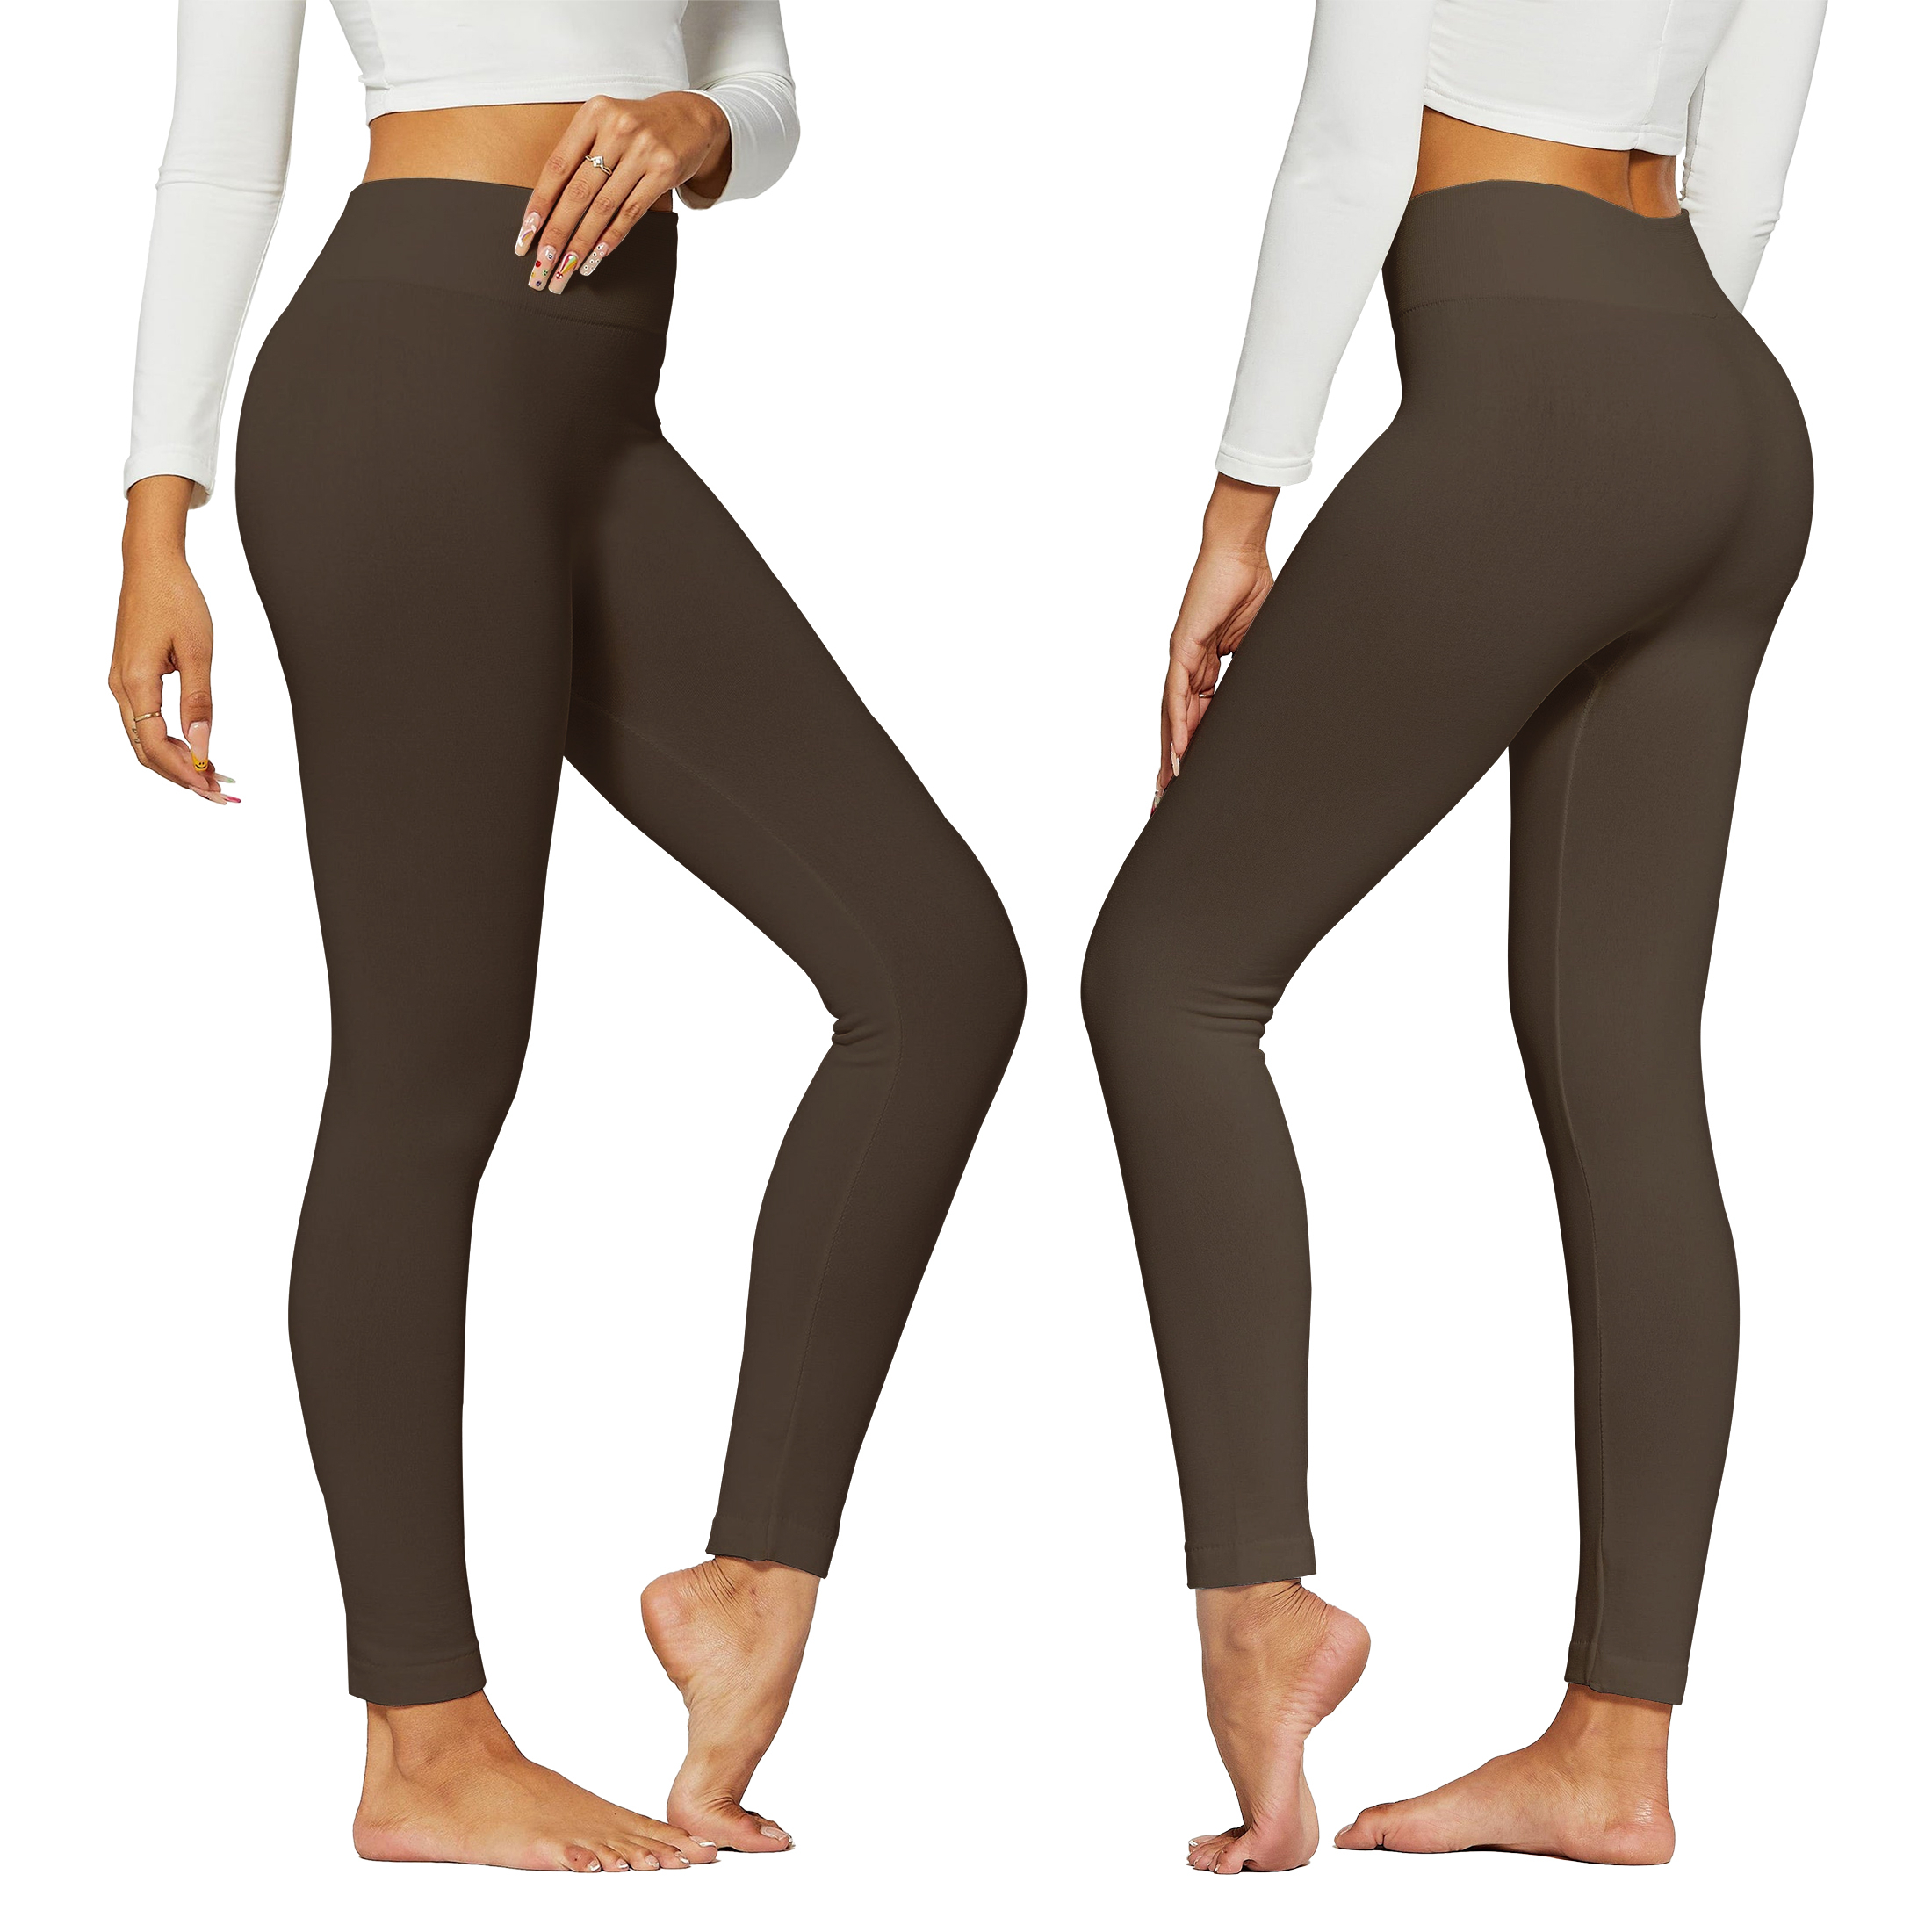 Women's Premium Quality High-Waist Fleece Lined Leggings (S-4X) - Brown, Large/X-Large